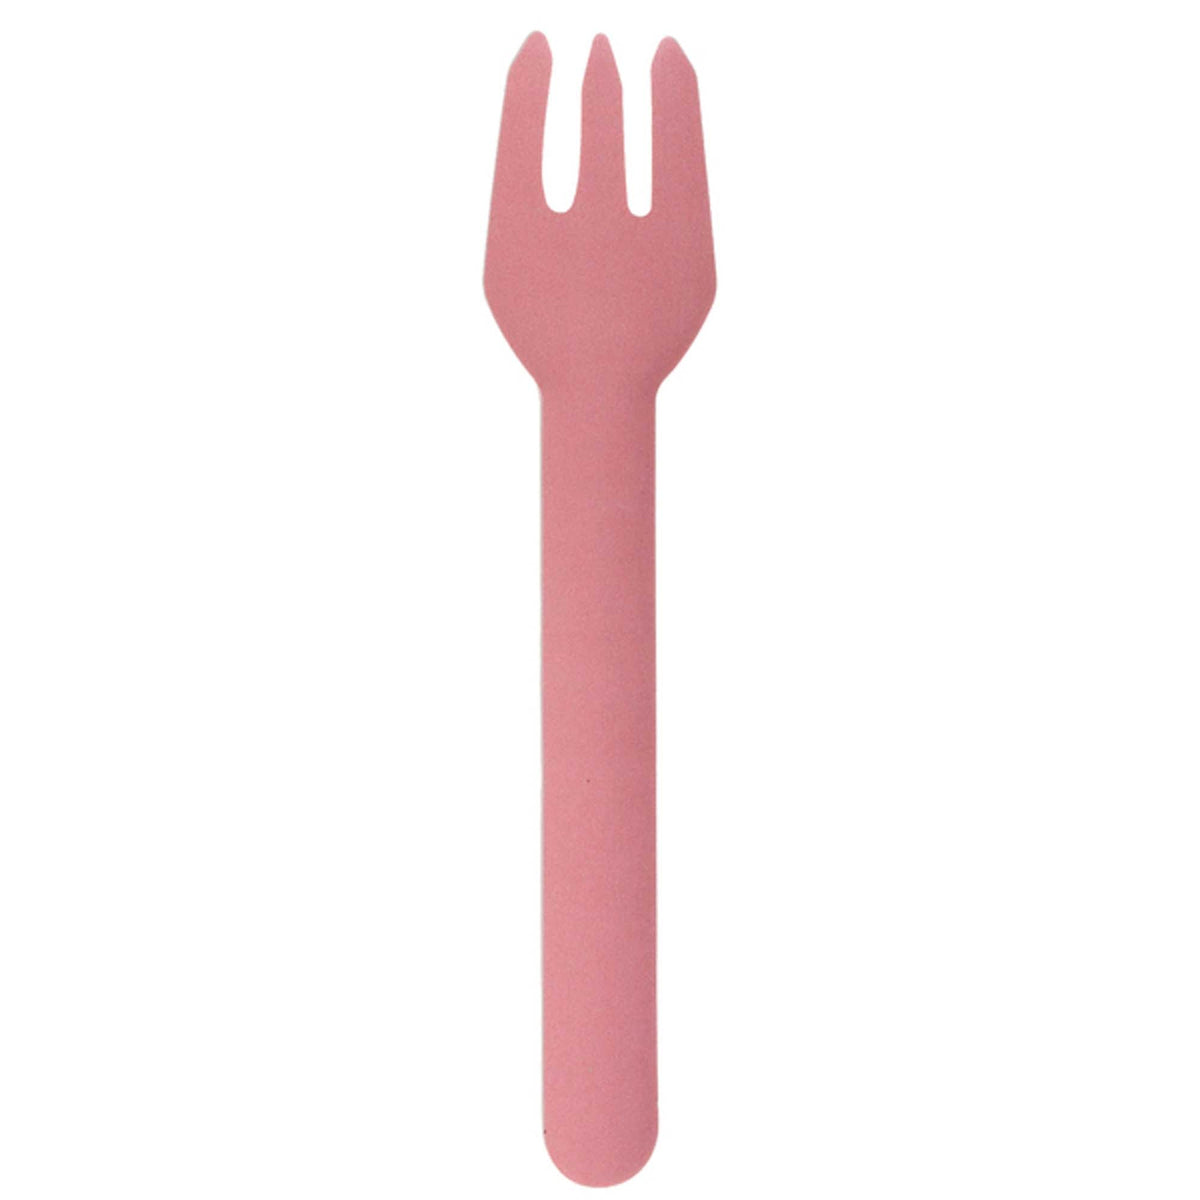 SANTEX Disposable-Plasticware Pink ECO Paper Forks, 10 Count